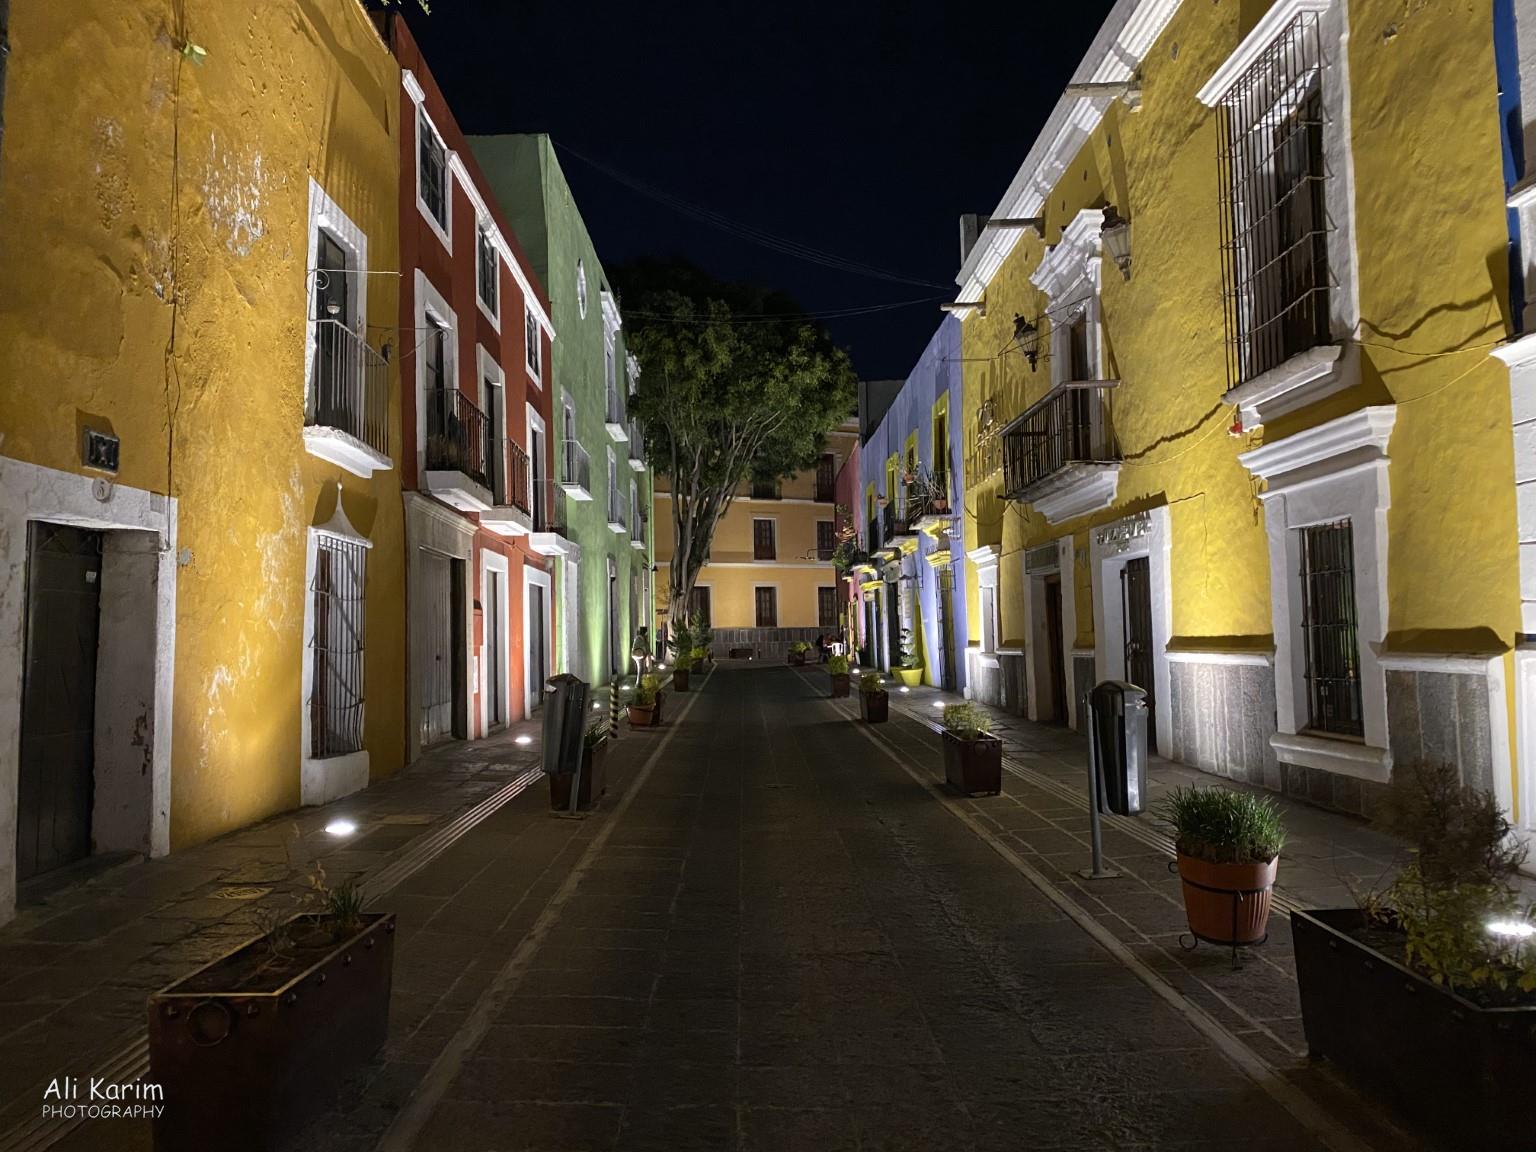 Puebla, Mexico Dec 2020, Street scene at night